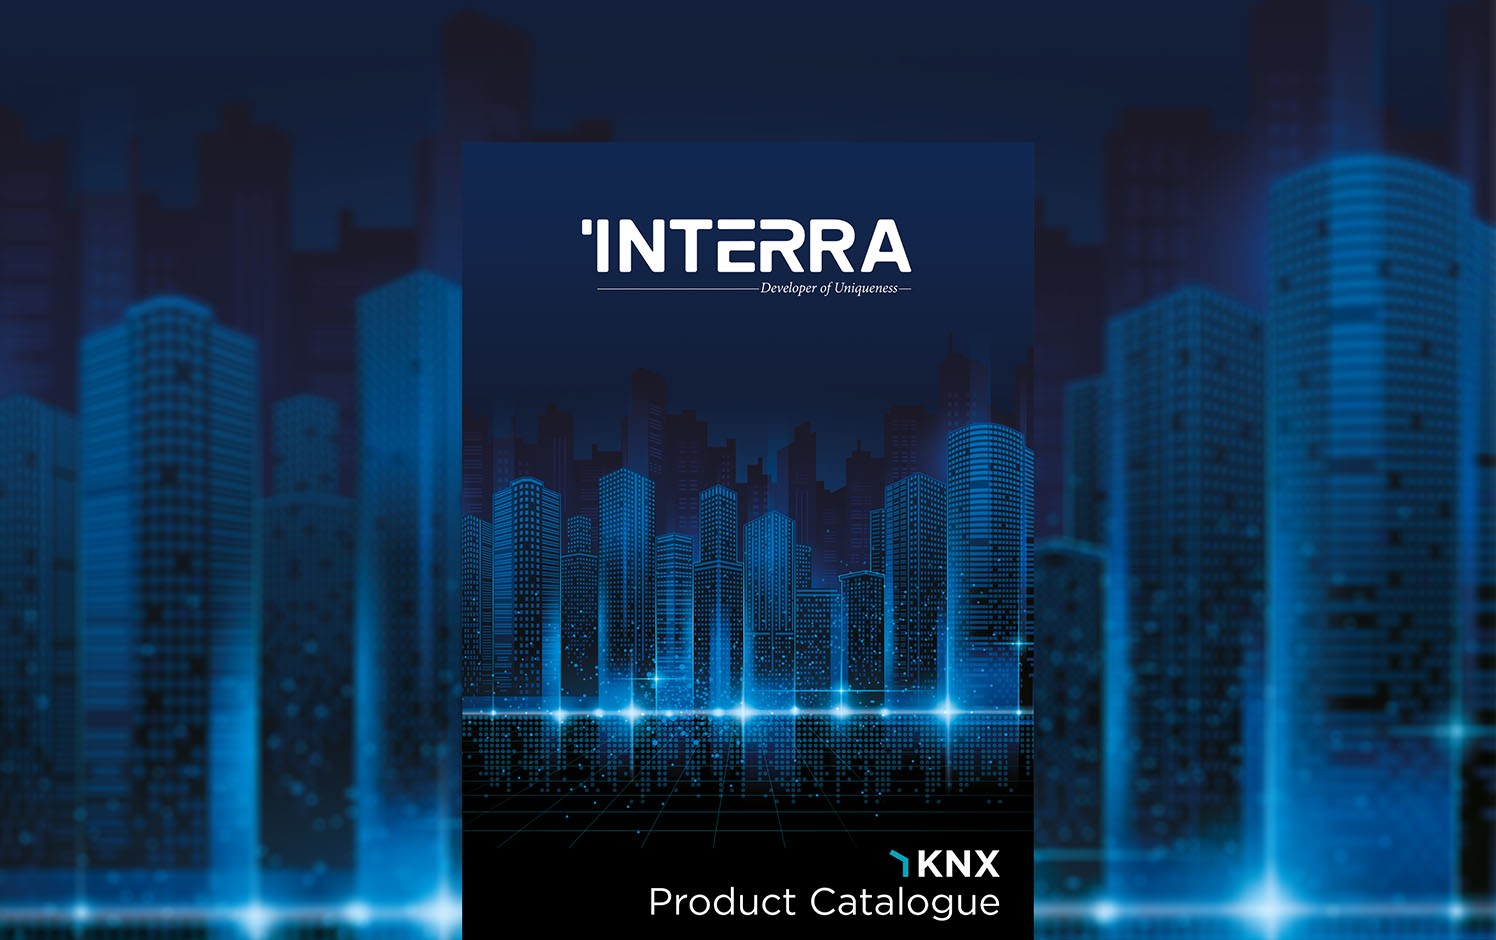 KNX Product Catalog